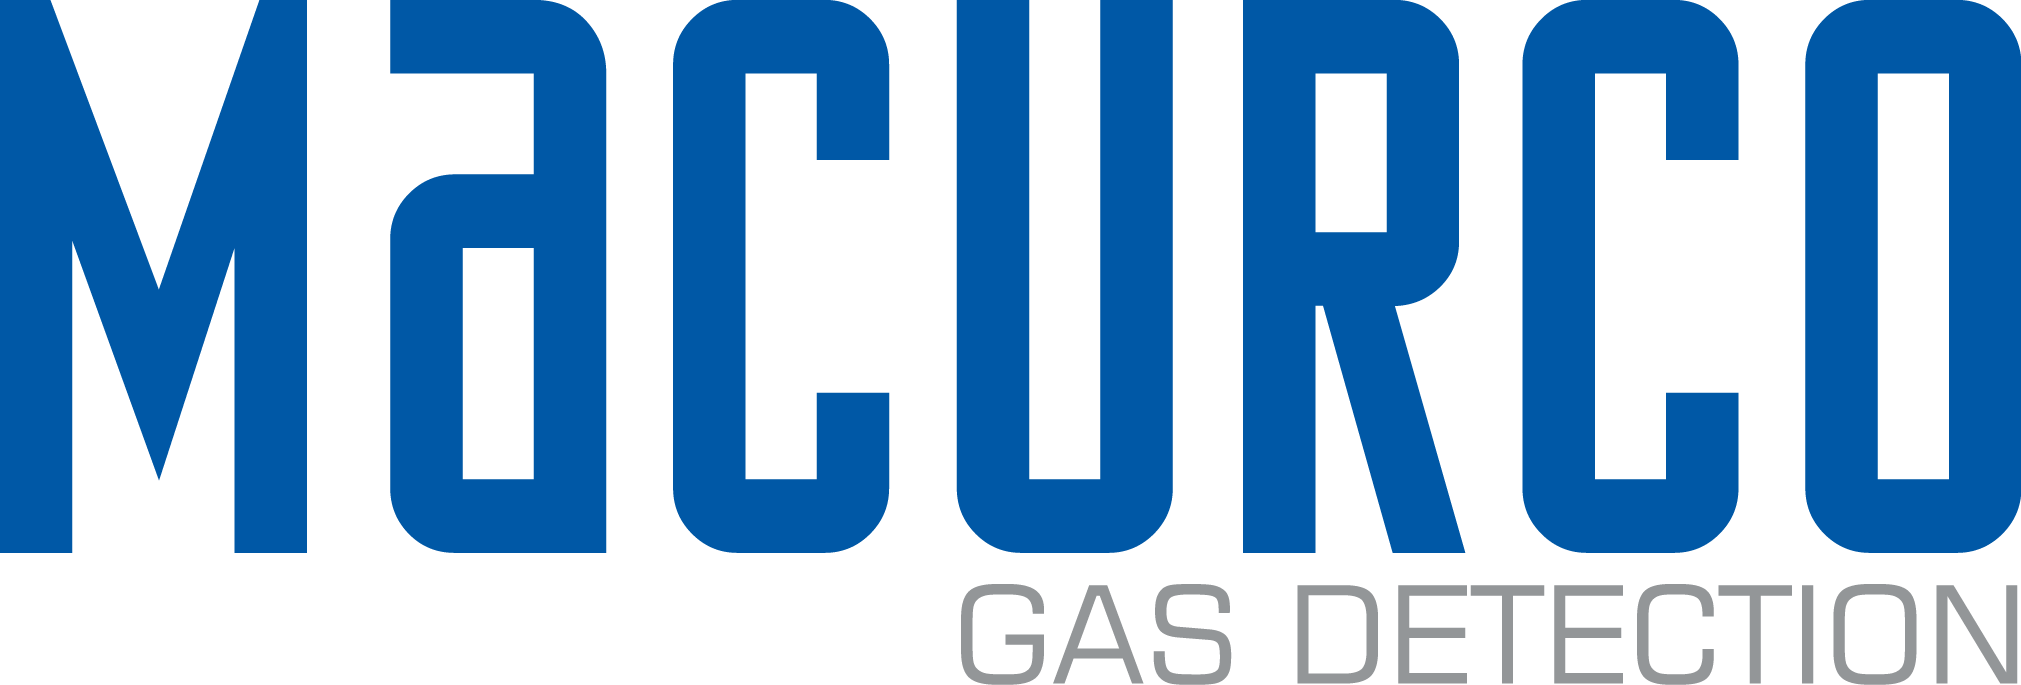 Macurco Gas Detection Logo